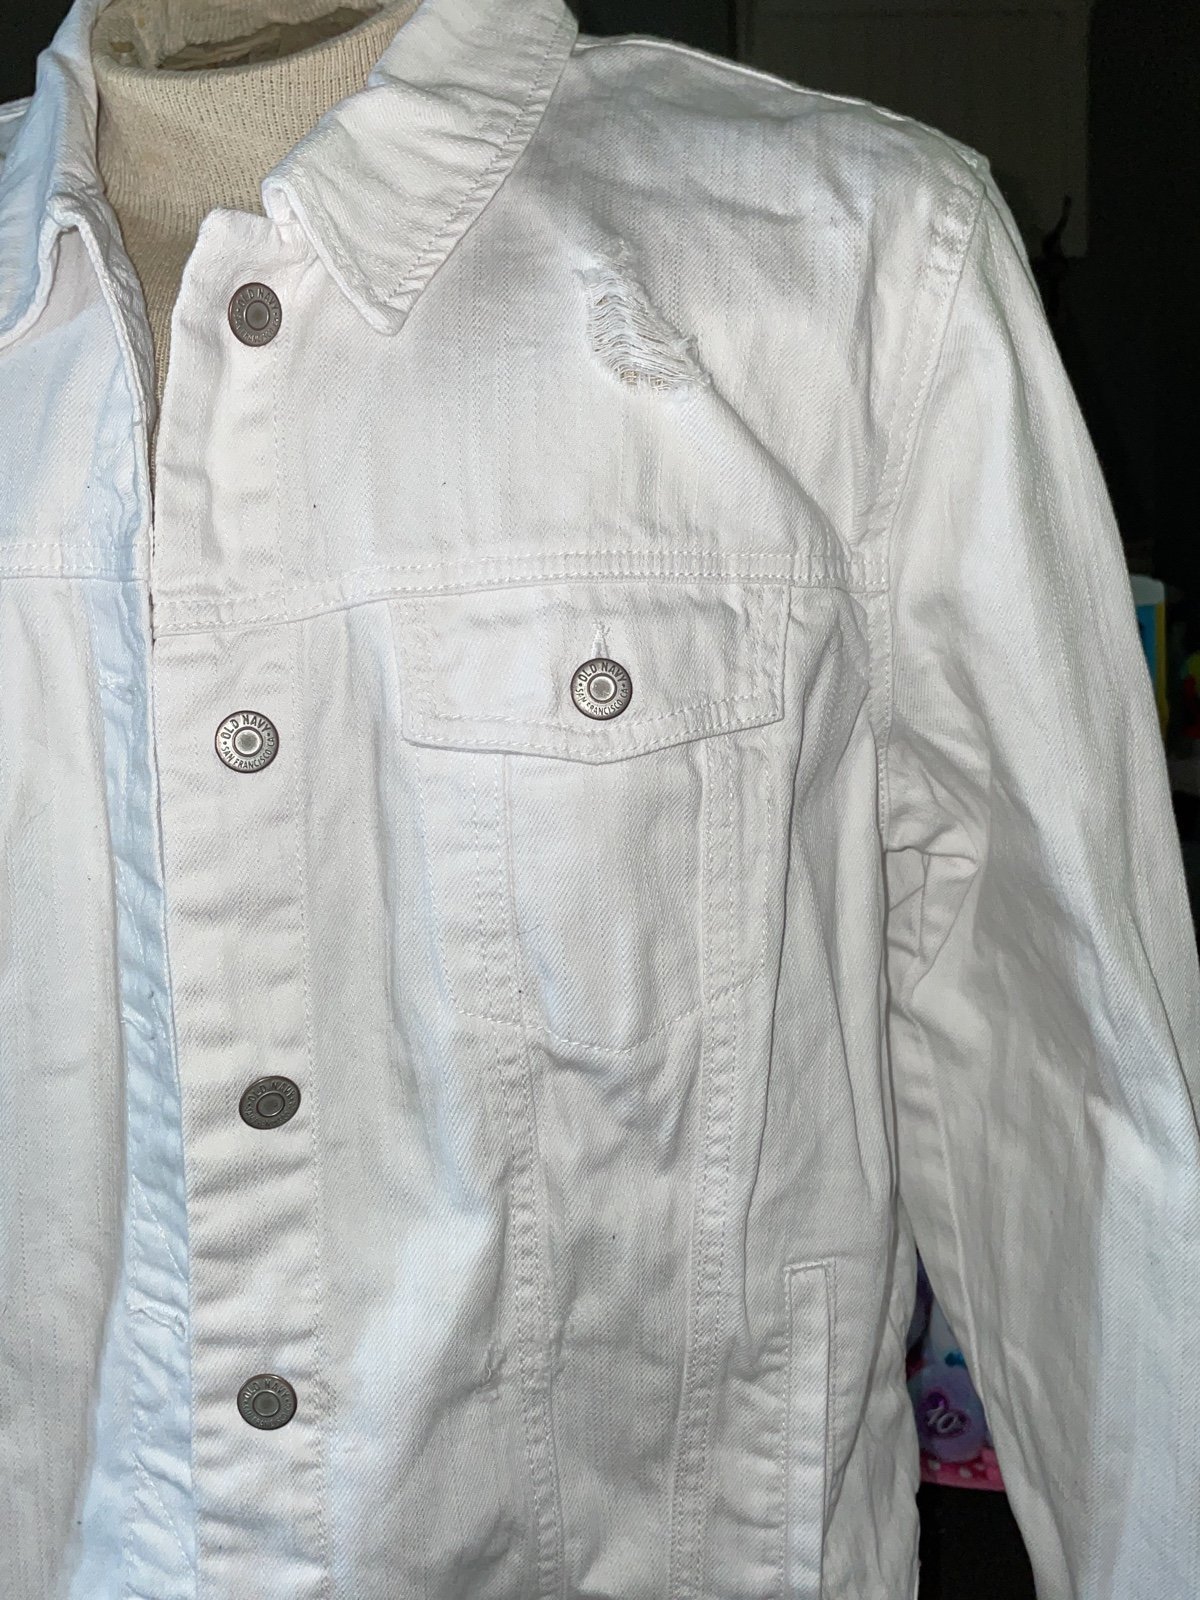 Stylish White jean woman’s Jacket k8dCBayN1 New Style